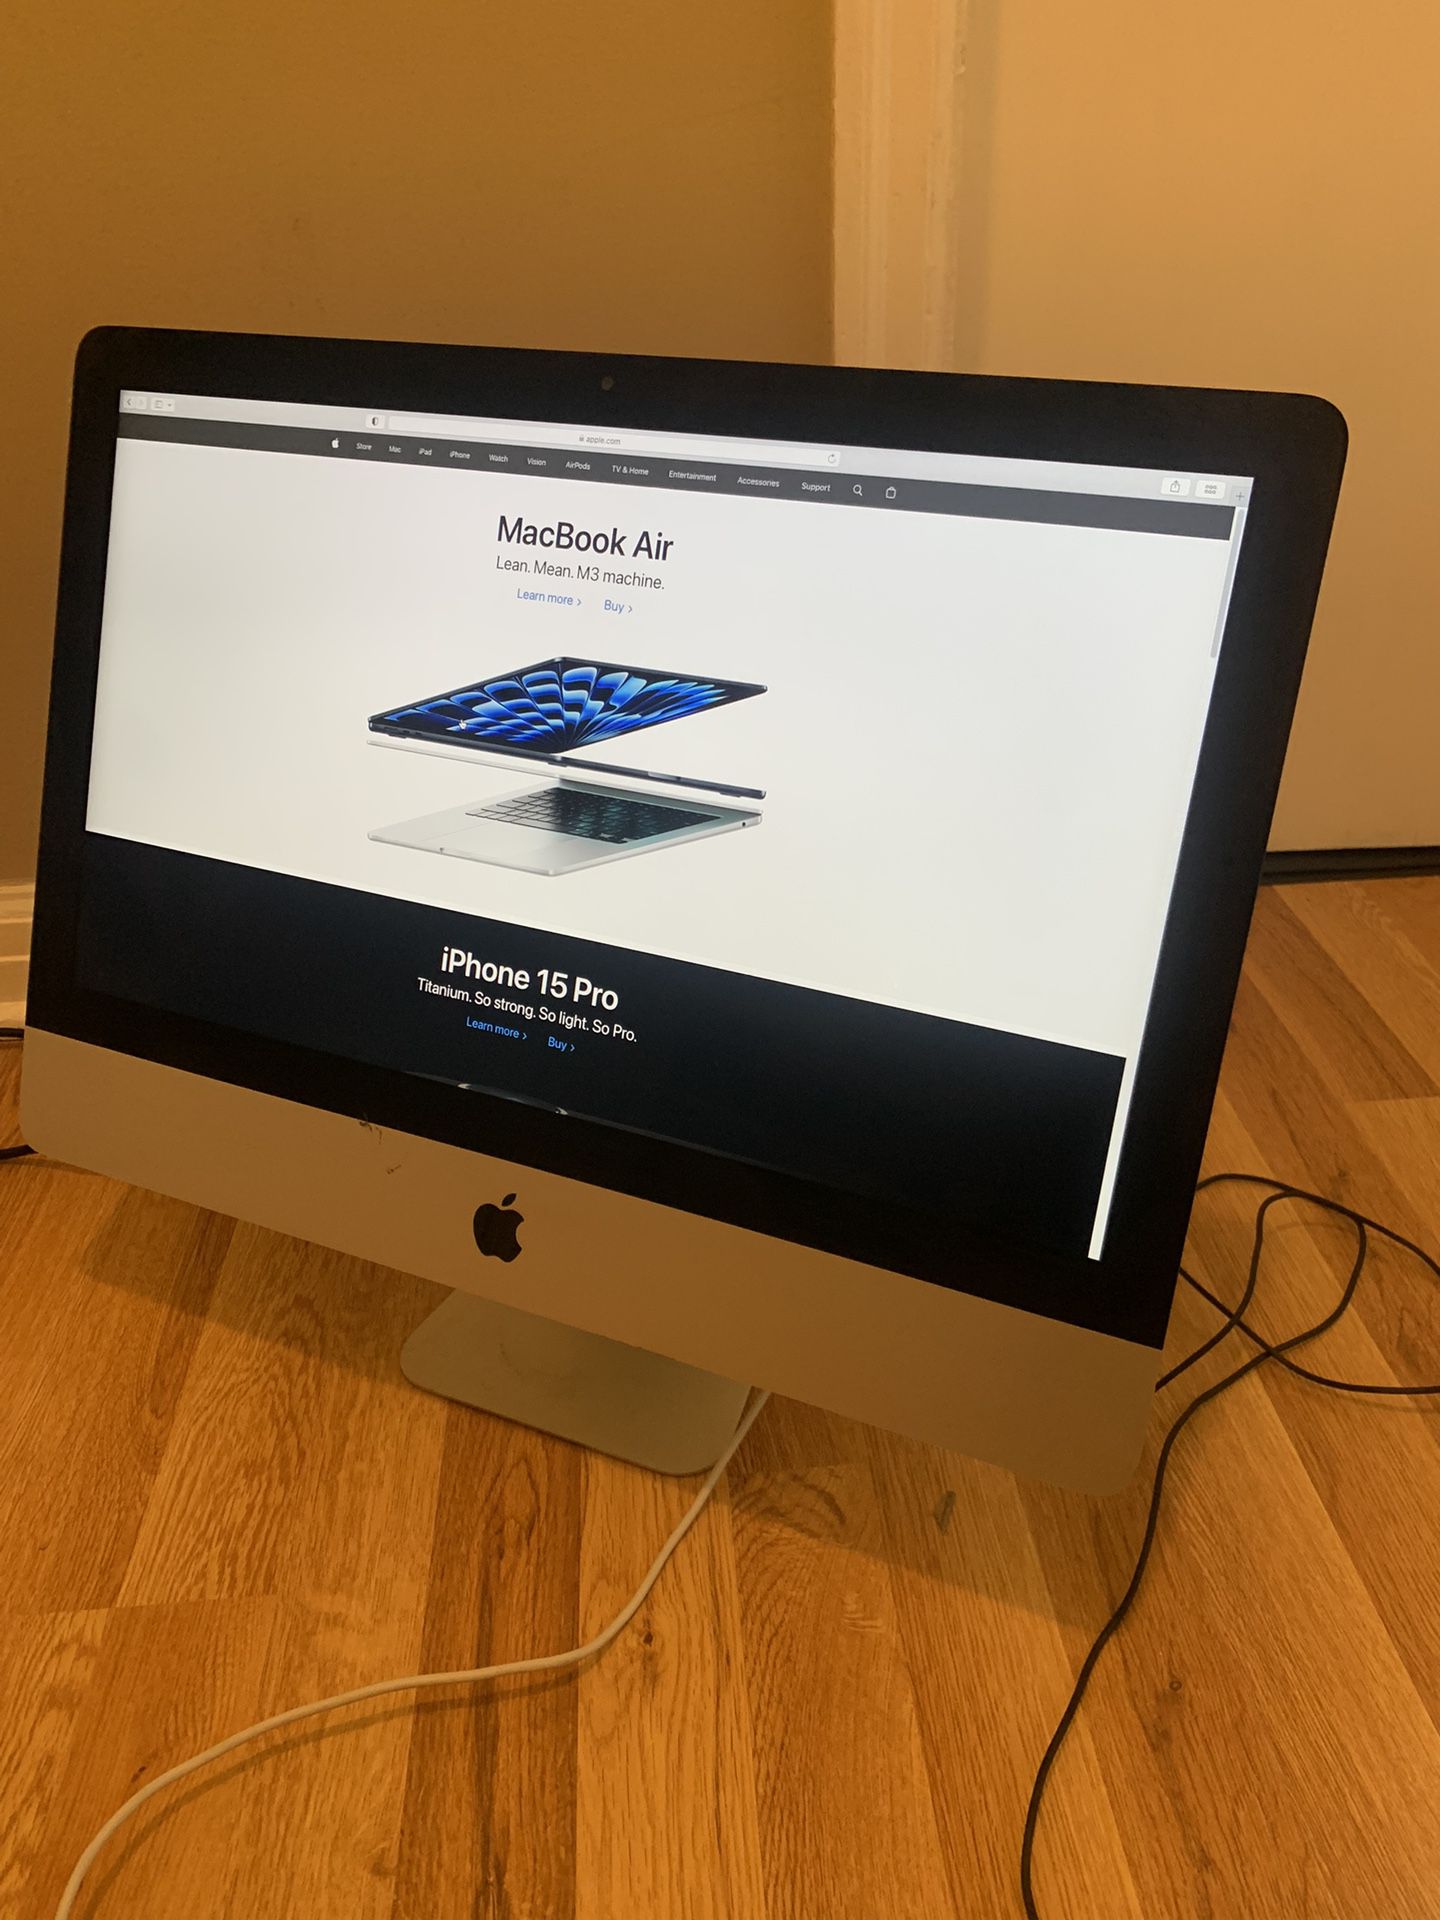 Apple iMac Computer For Sale